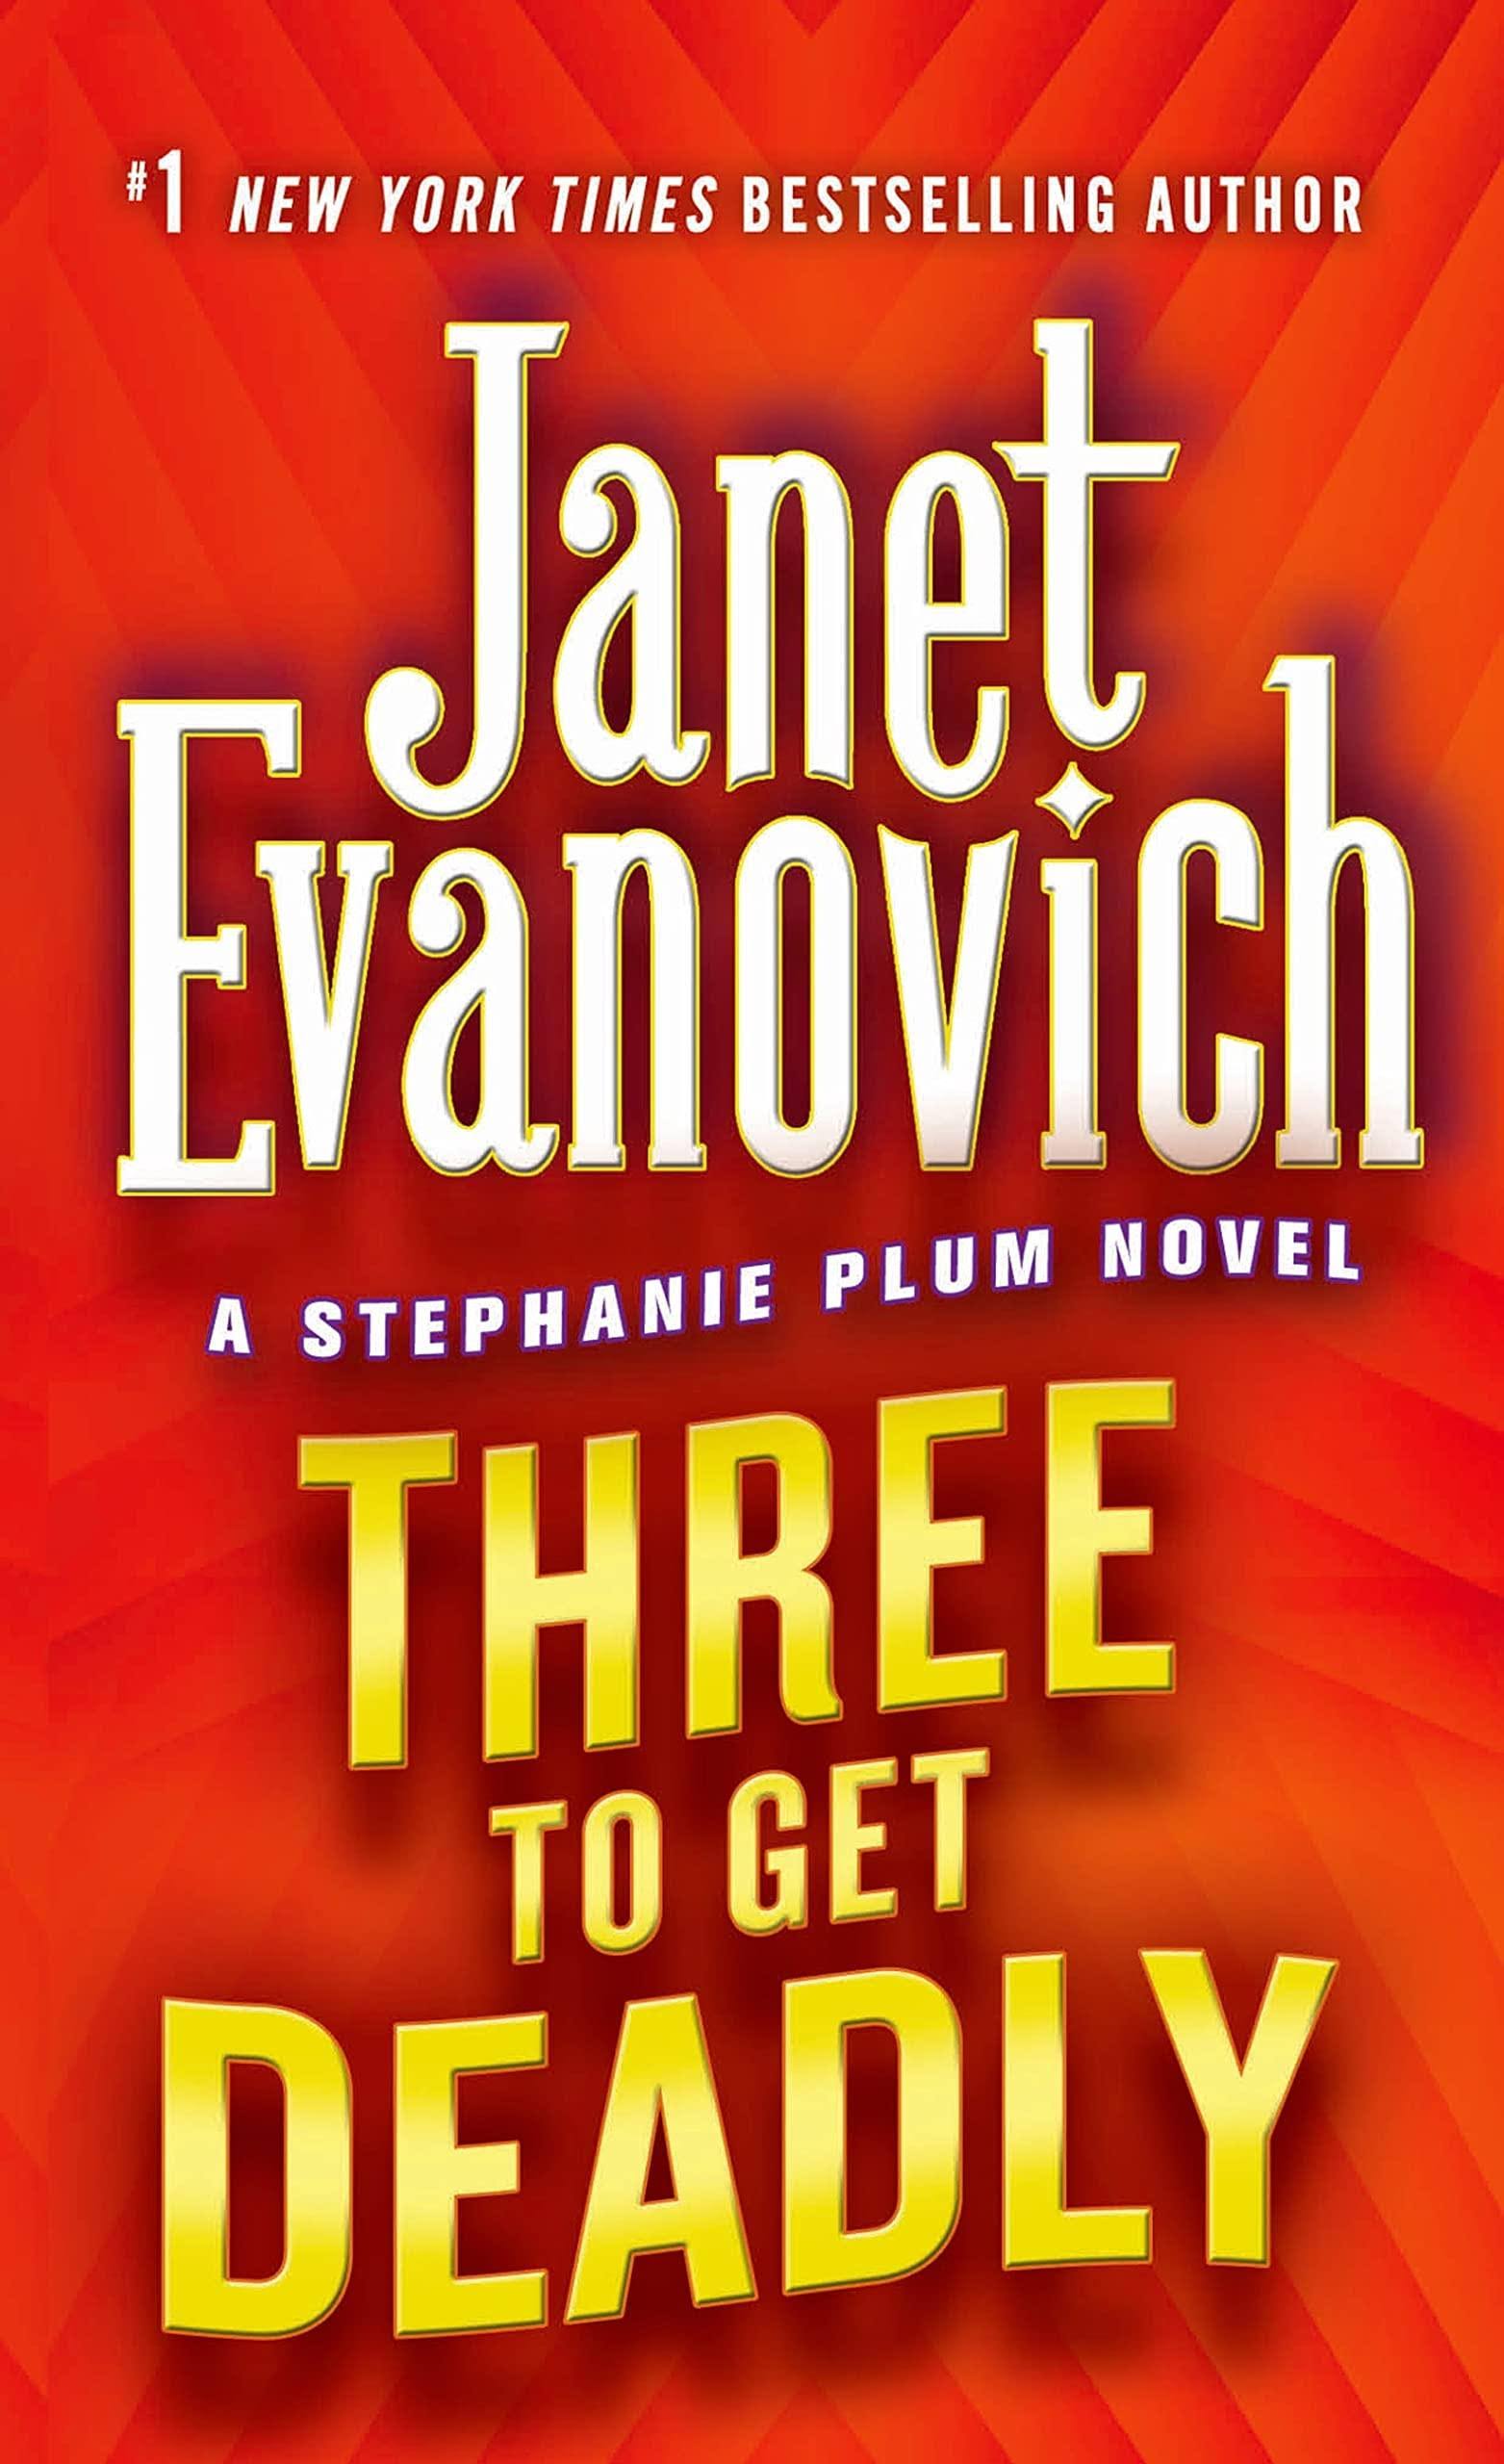 Three To Get Deadly: A Stephanie Plum Novel [Book]